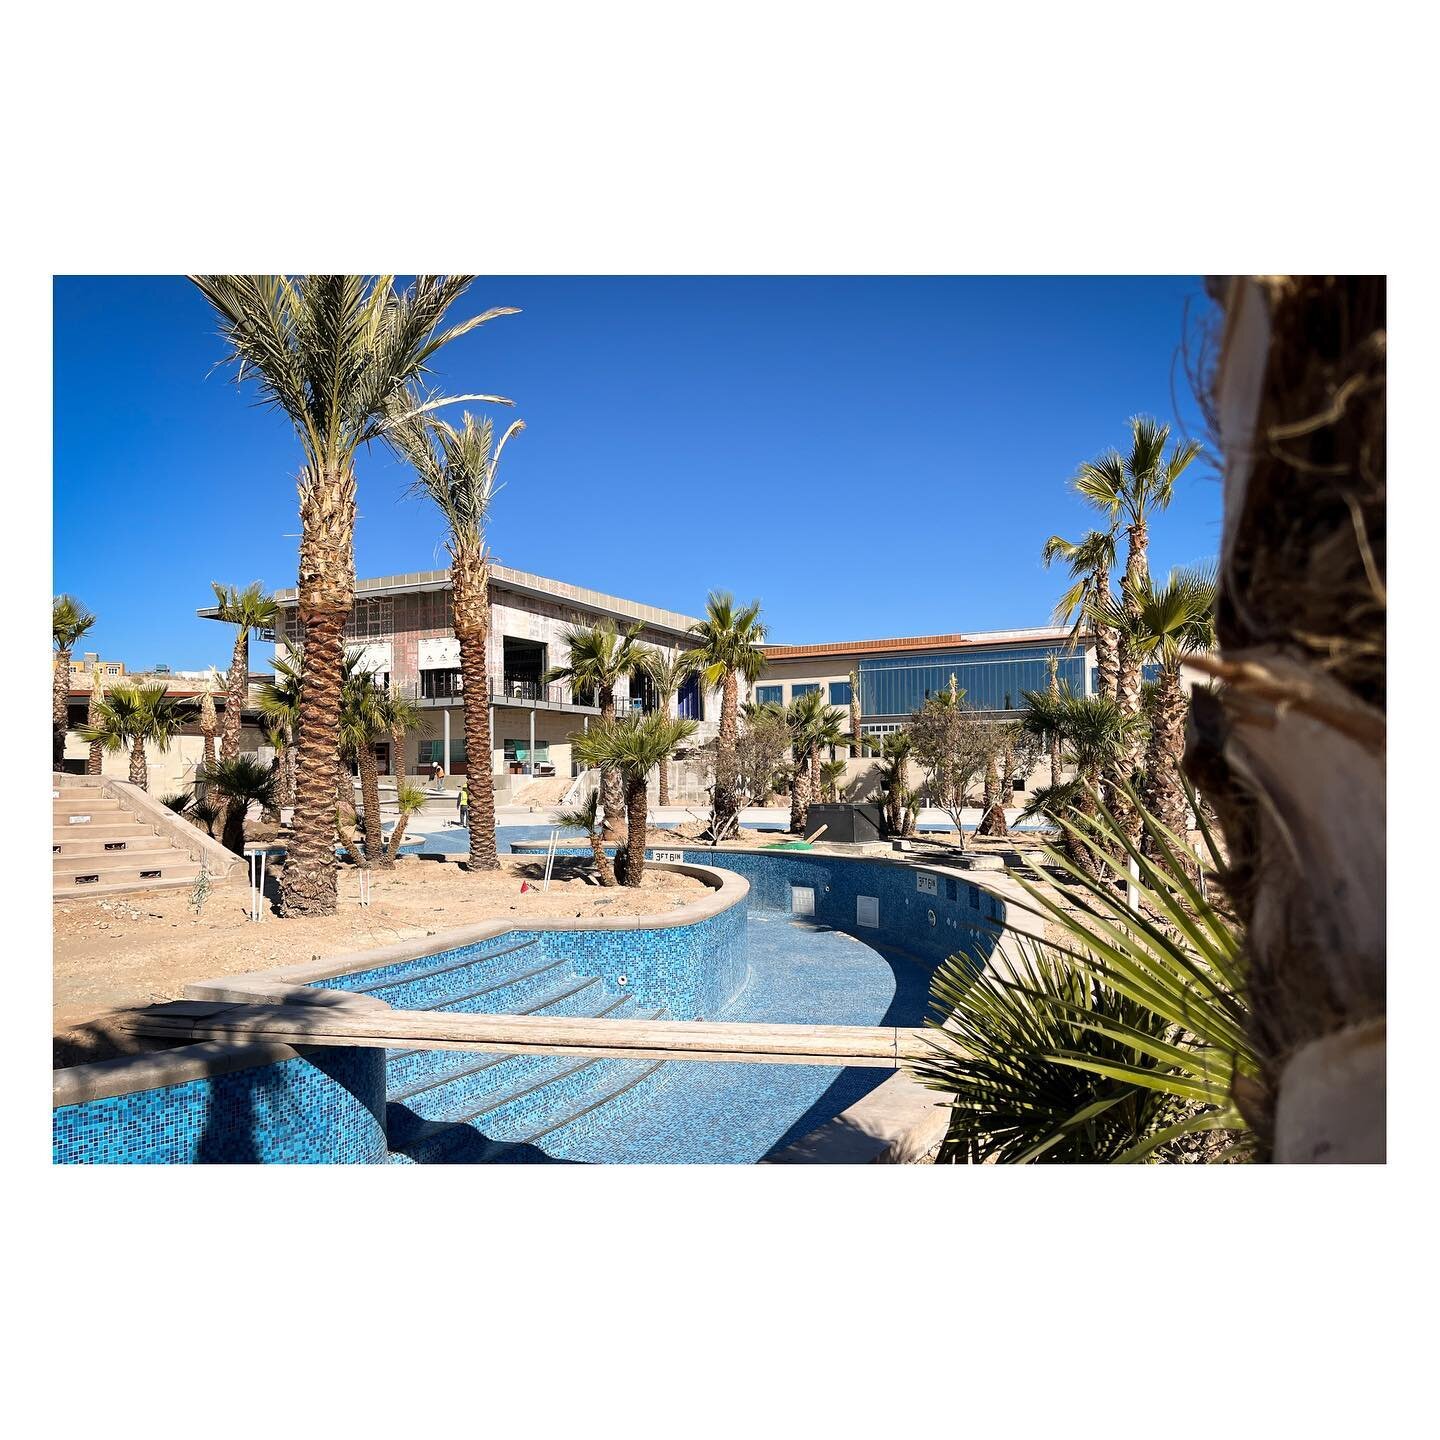 Montecillo resort pool in progress. 

#elpaso #juarez #lascruces